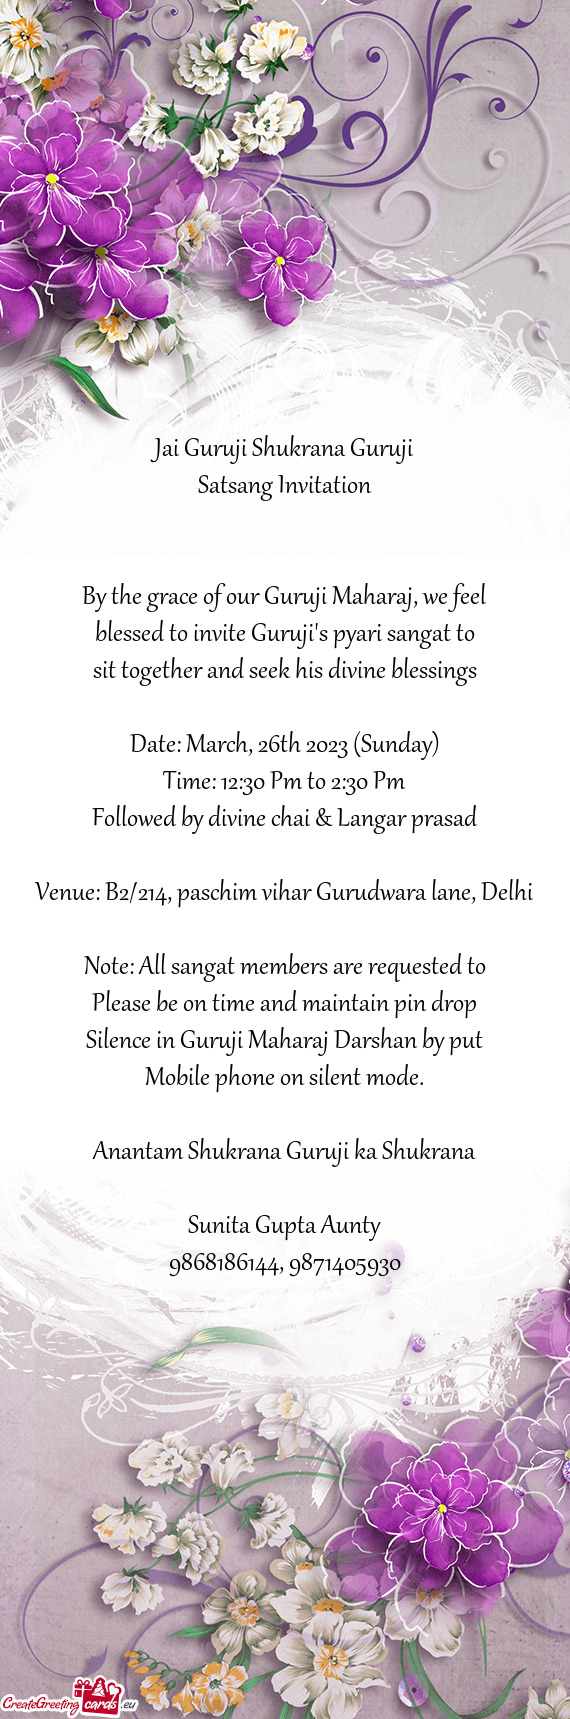 Blessed to invite Guruji